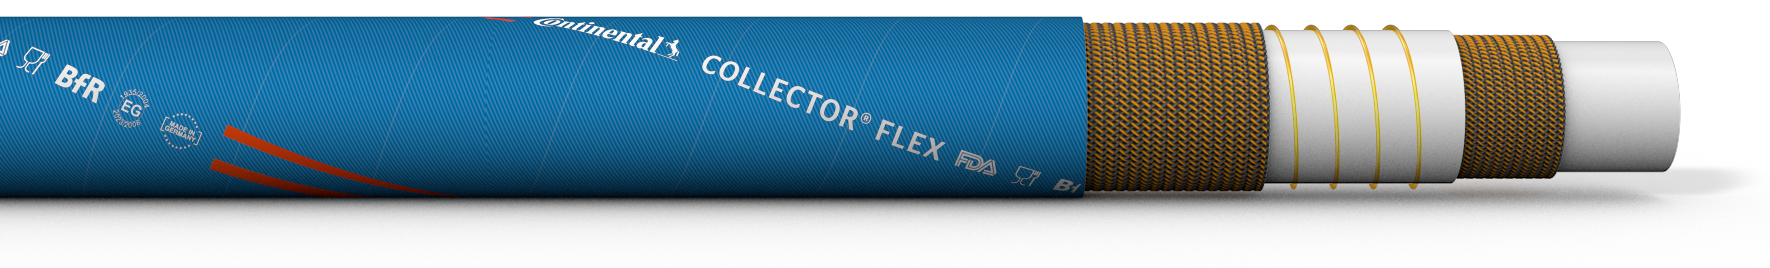 COLLECTOR® FLEX